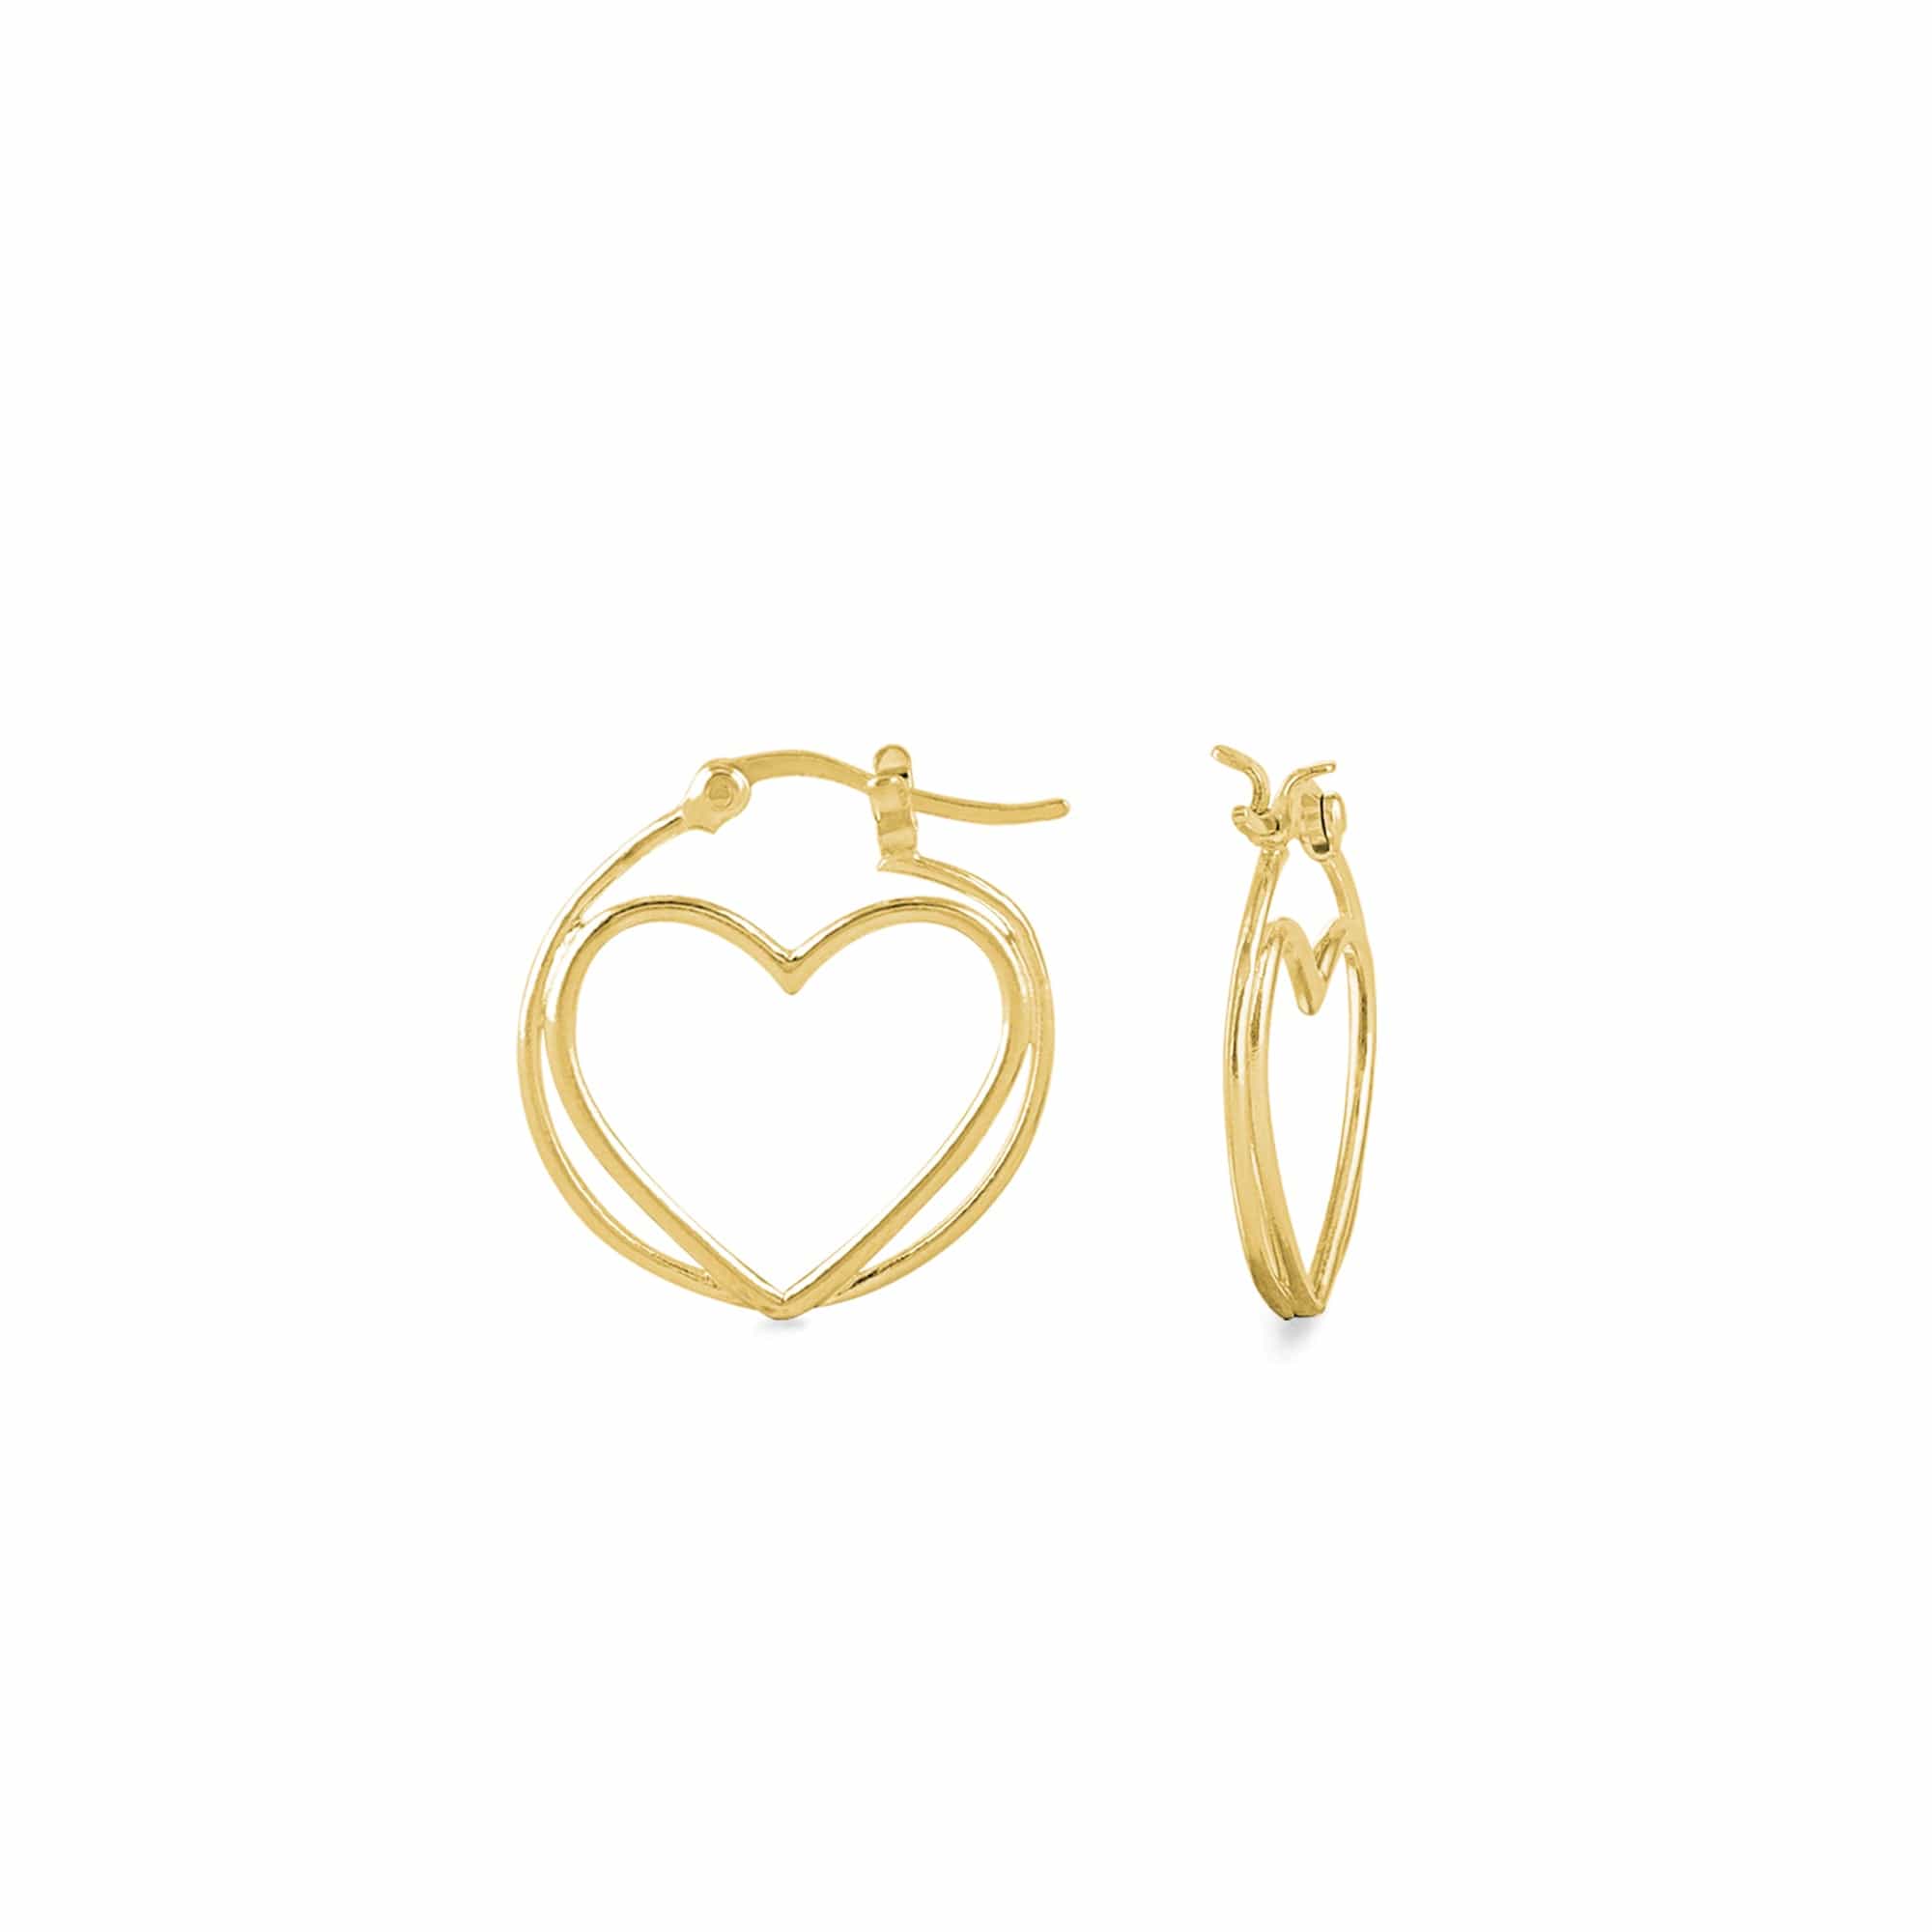 Boma Jewelry Earrings 14K Gold Plated Double Heart Hoops